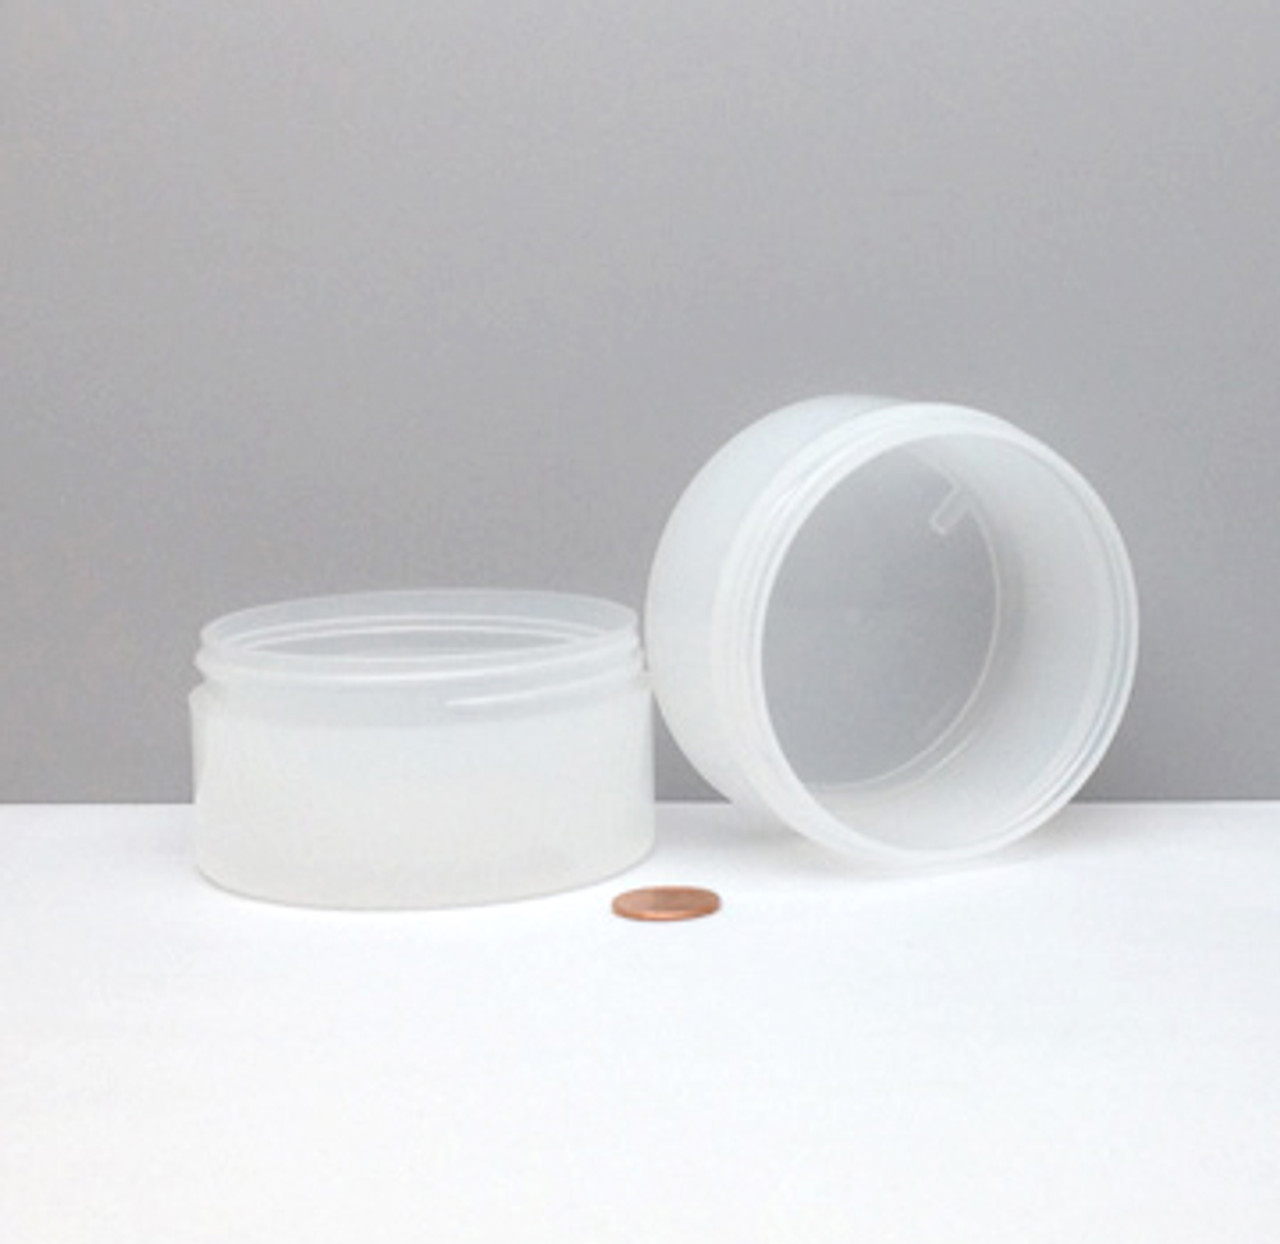 10 oz Plastic Jars with Lids - Parkway Plastics